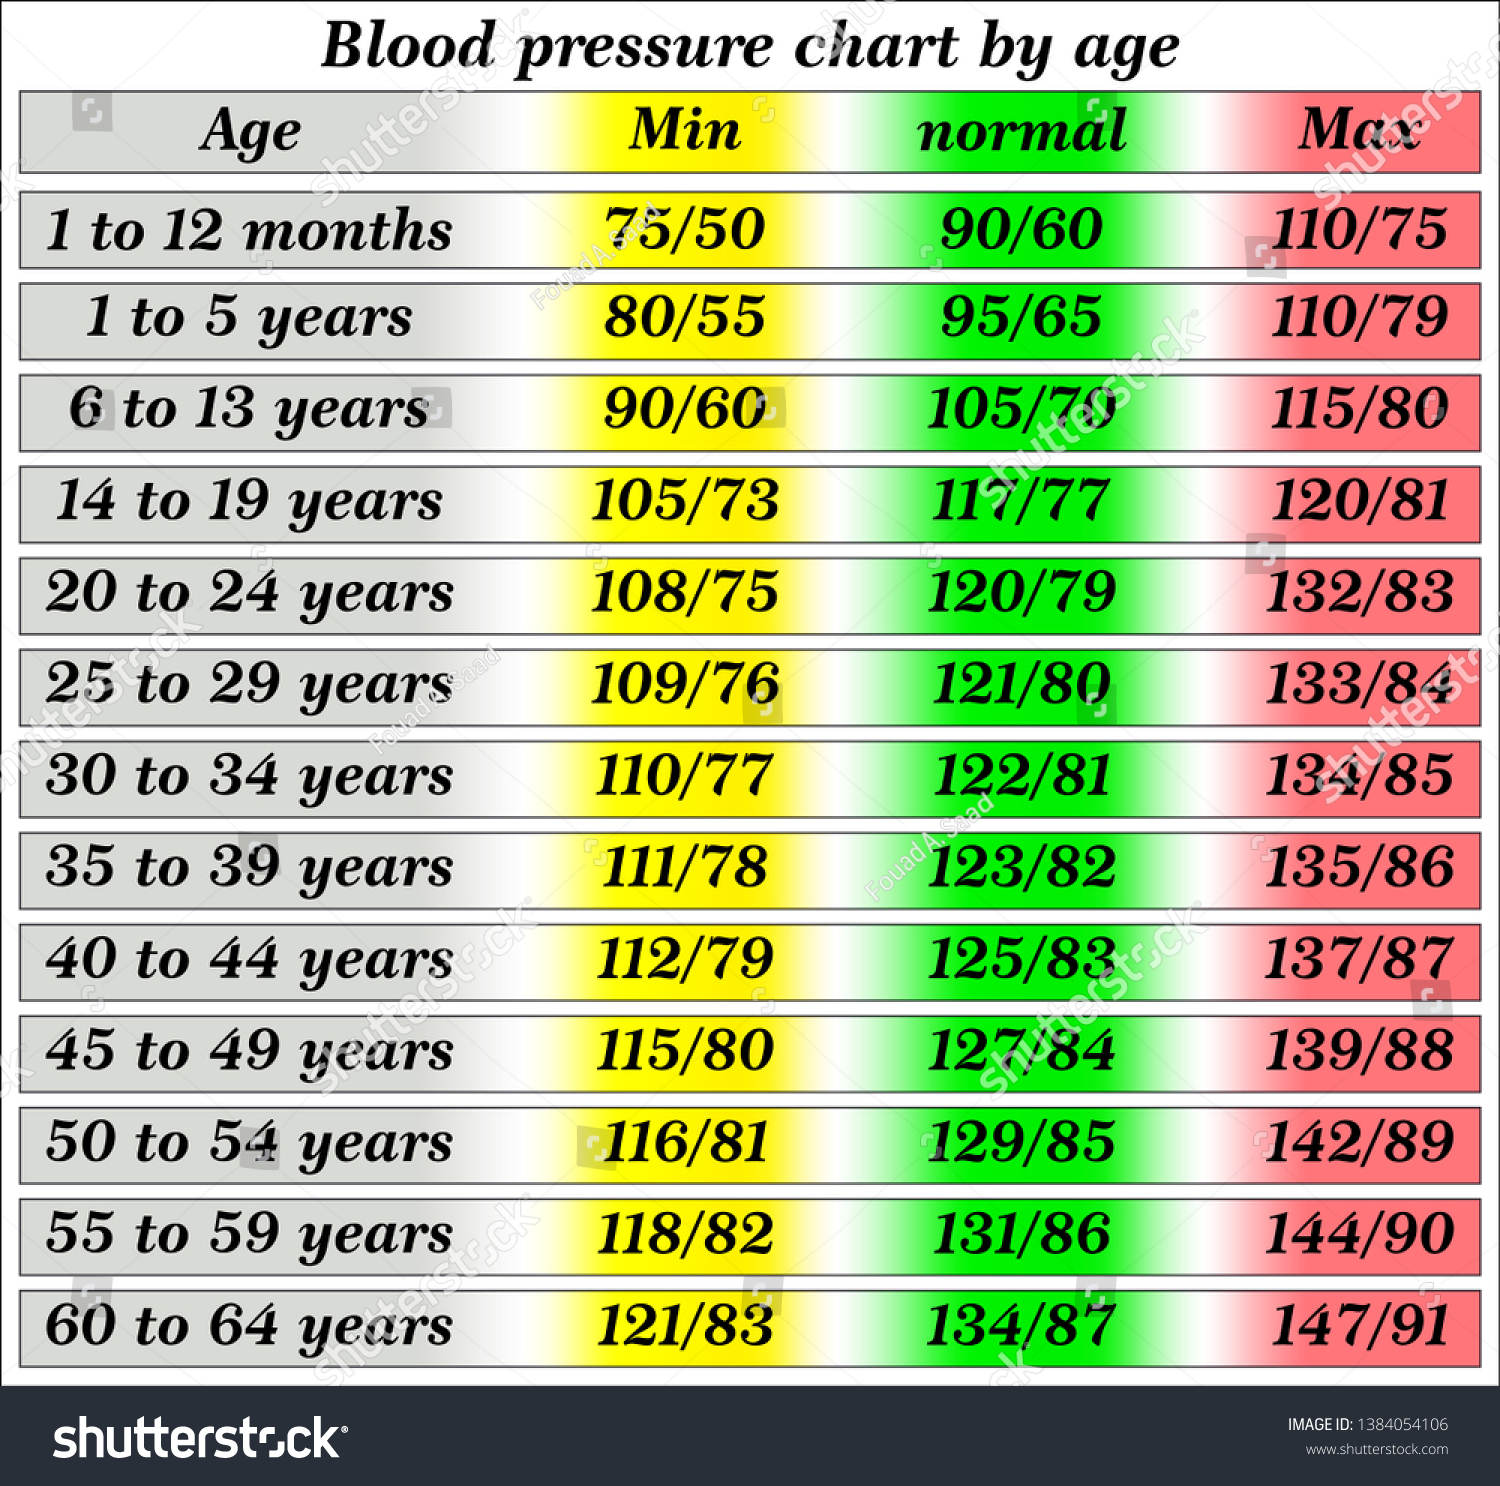 Blood Pressure Vs Age Chart